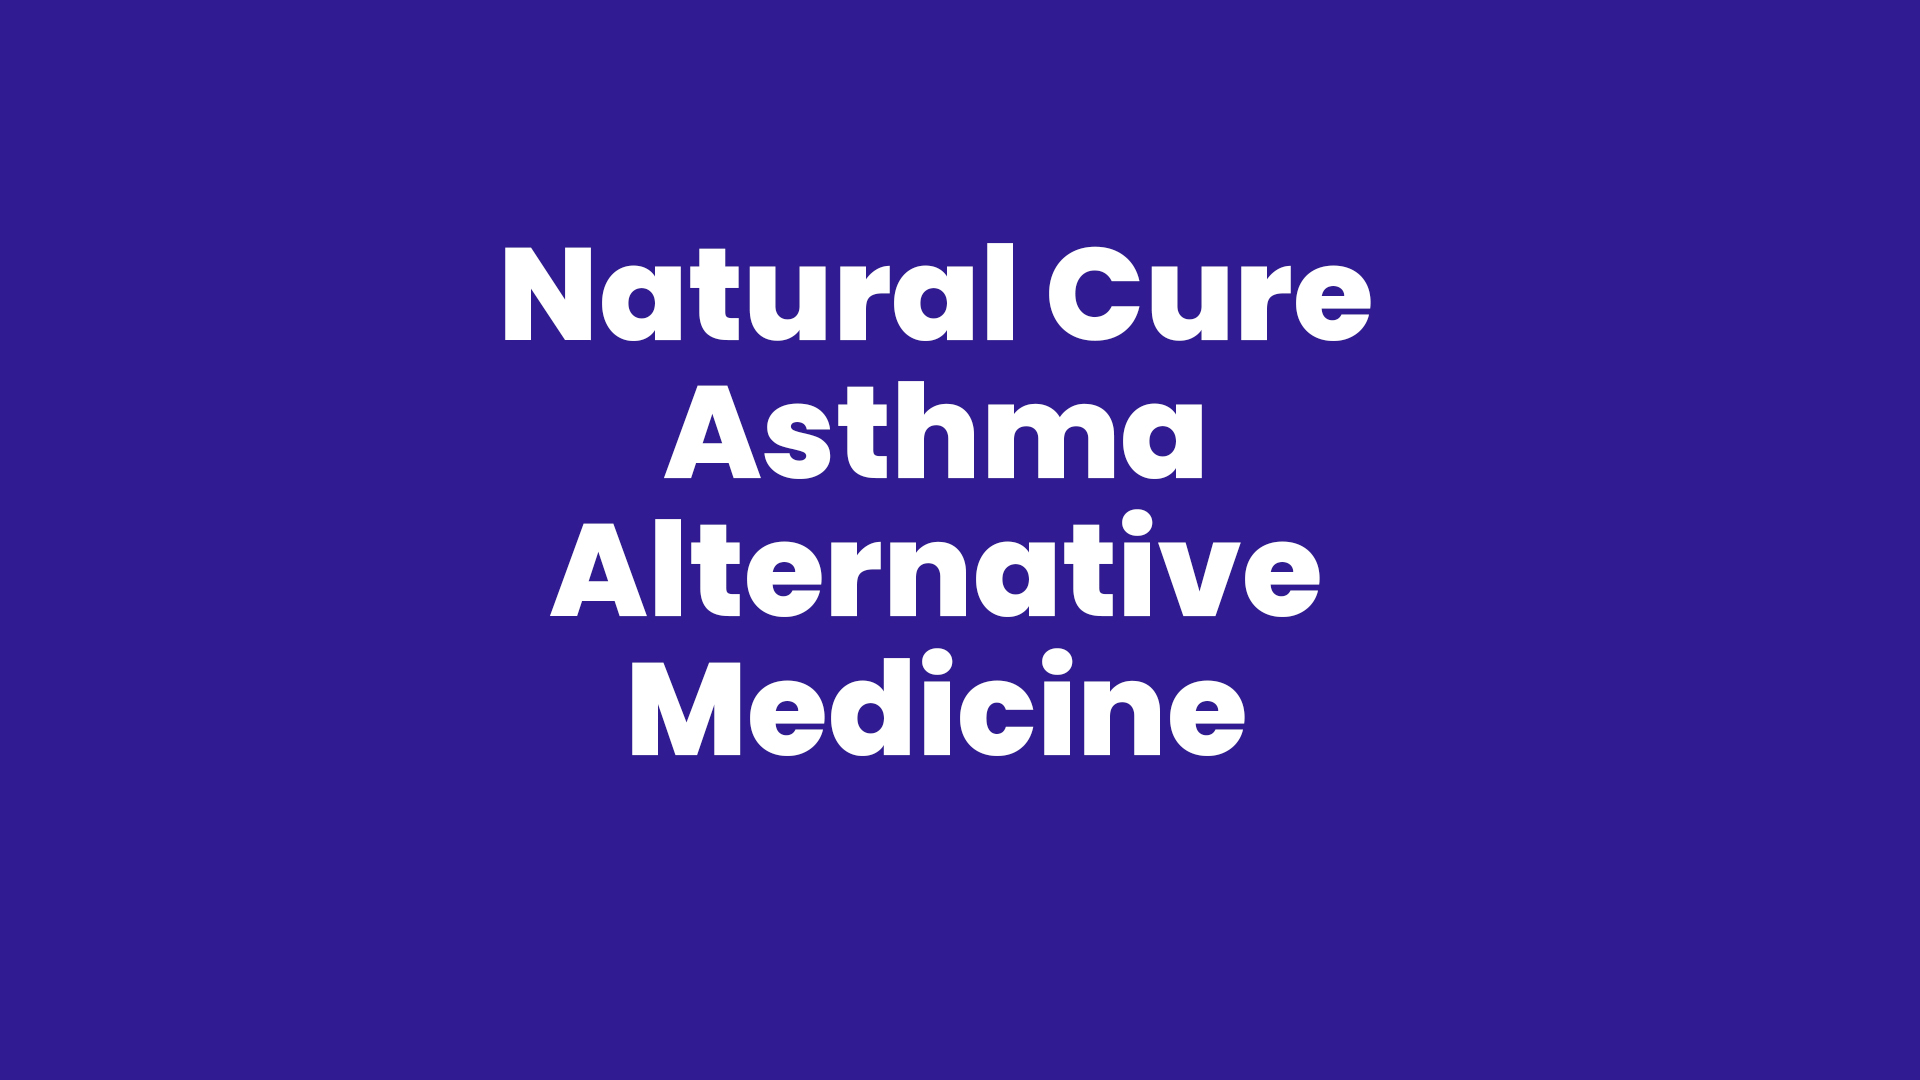 Natural Cure Asthma Alternative Medicine